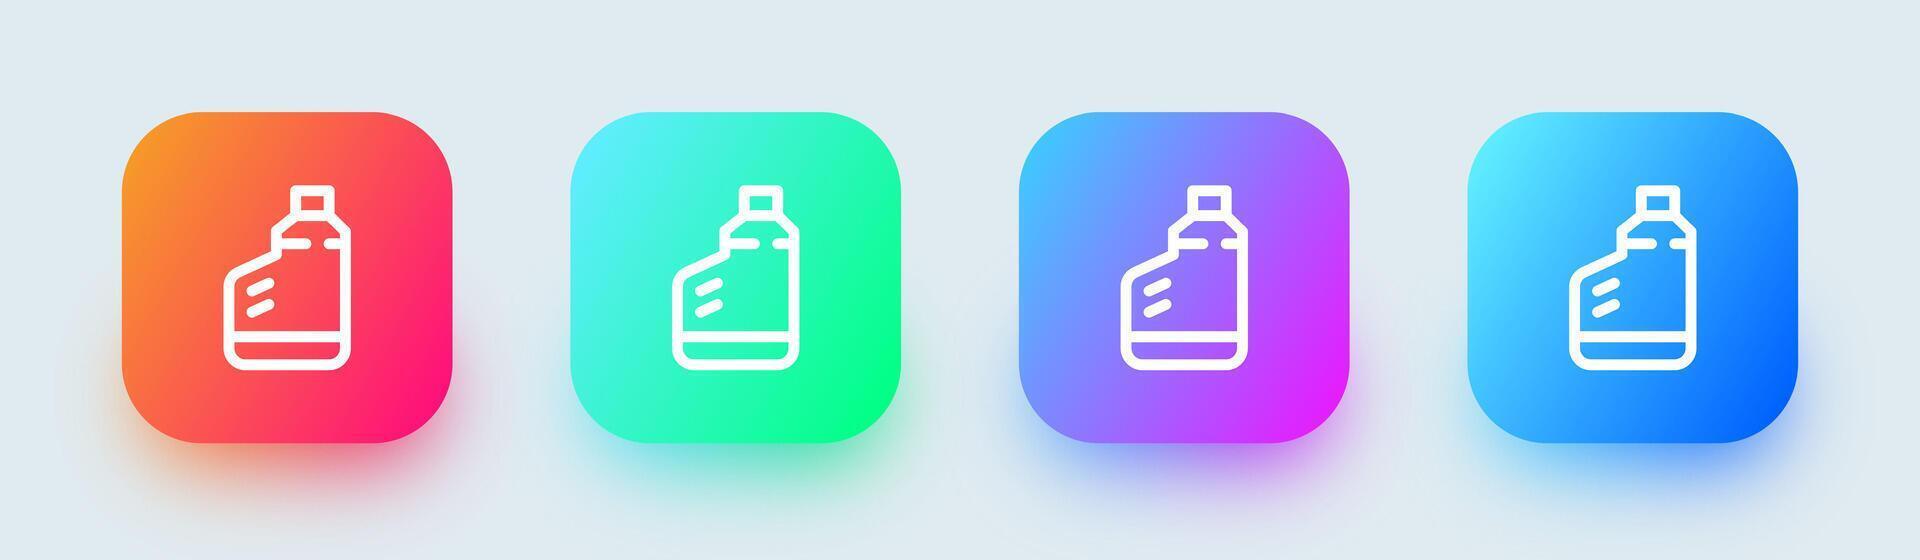 Oil line icon in square gradient colors. Gasoline signs vector illustration.